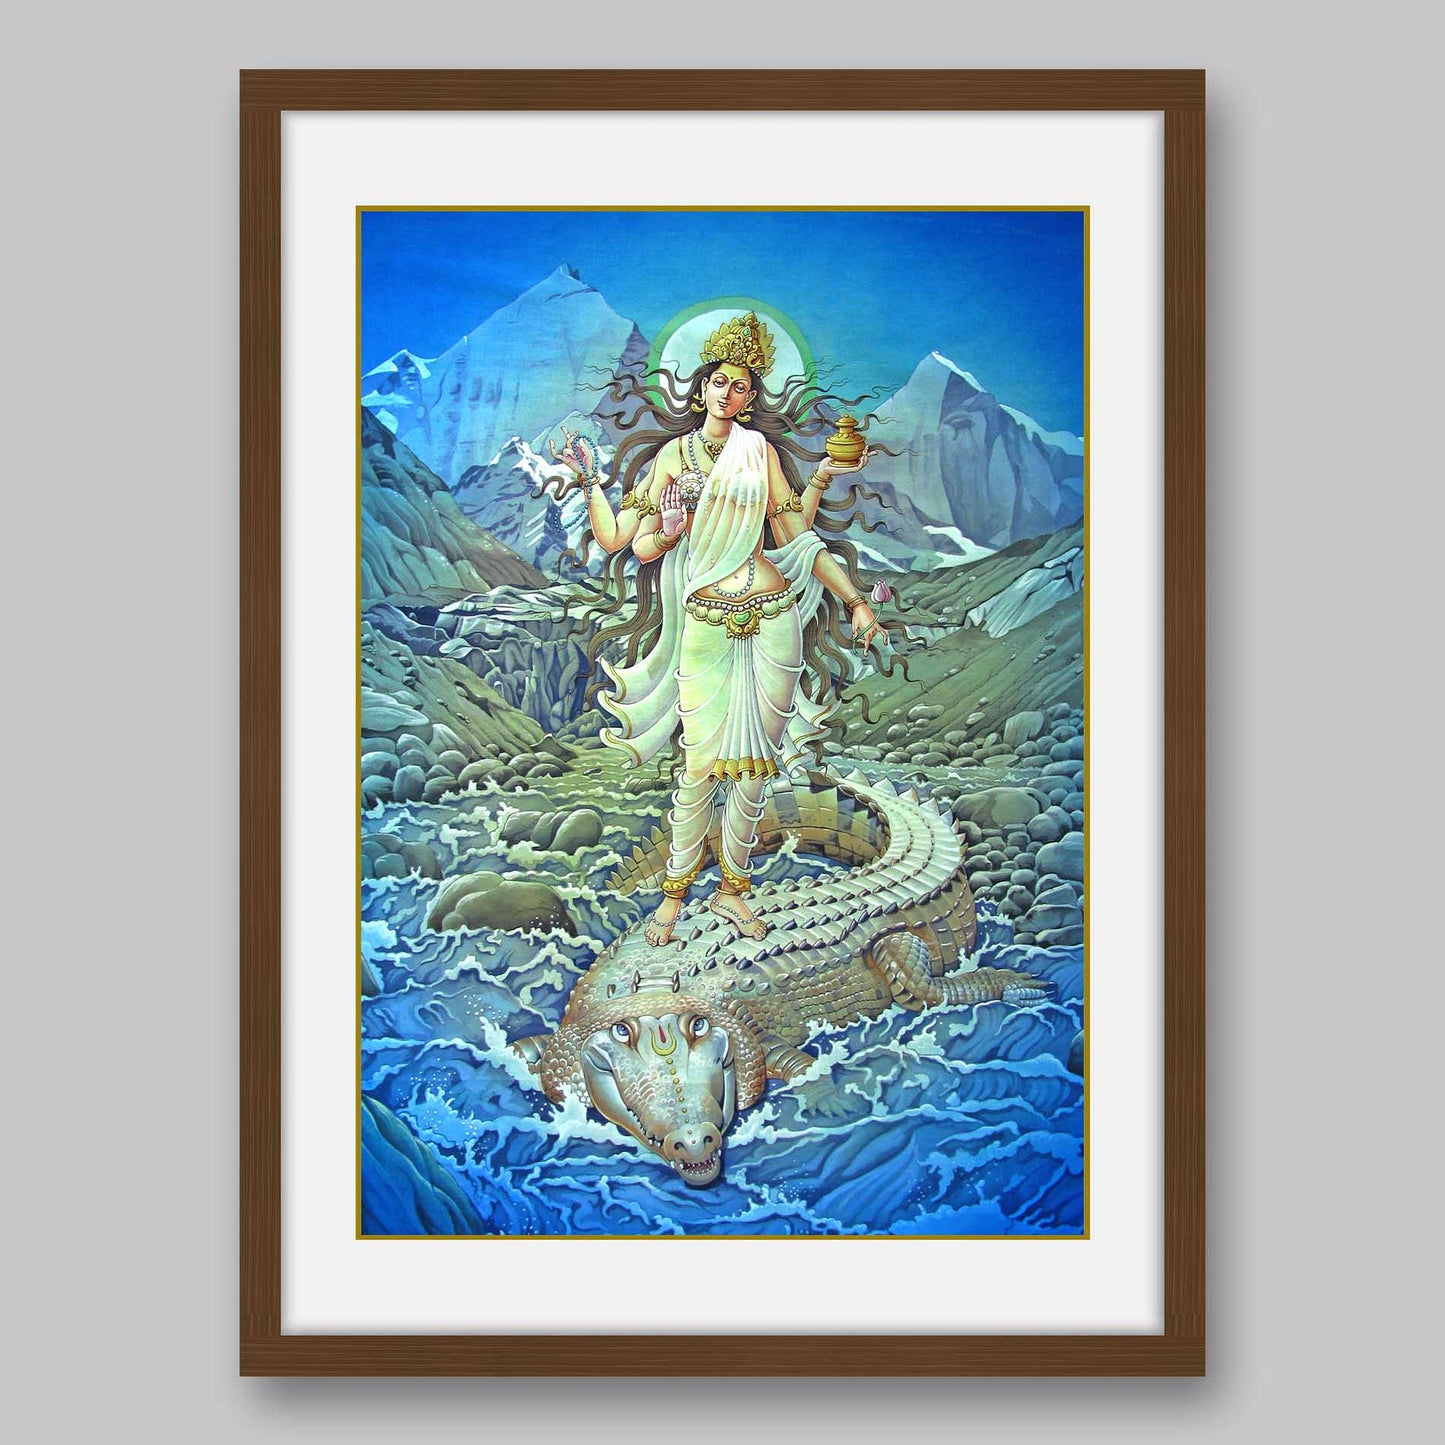 Ganga – High Quality Print of Artwork by Pieter Weltevrede